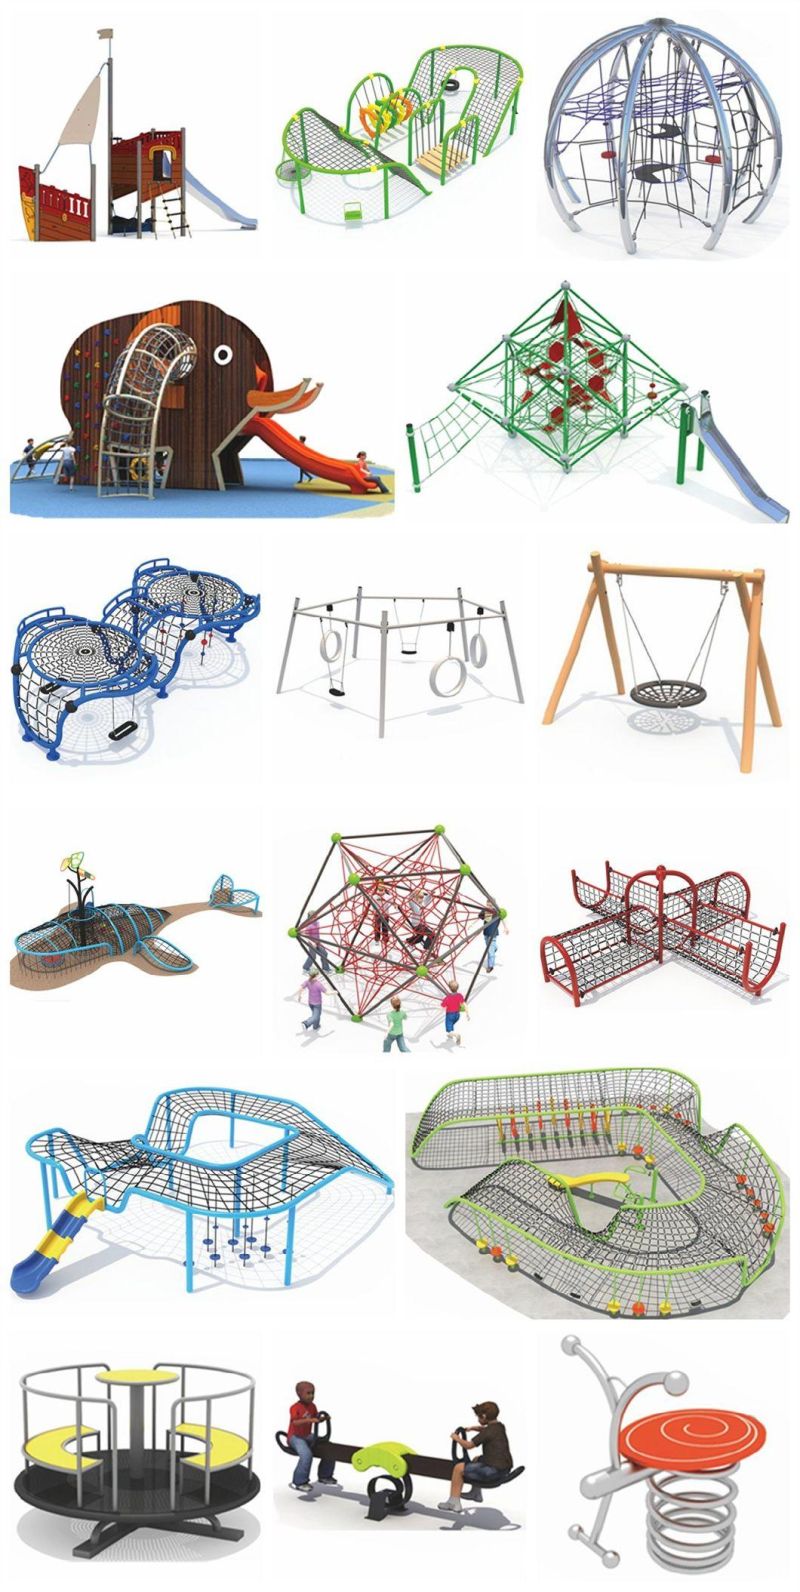 Park Circular Mesh Cage Slide Community Children Outdoor Playground Equipment